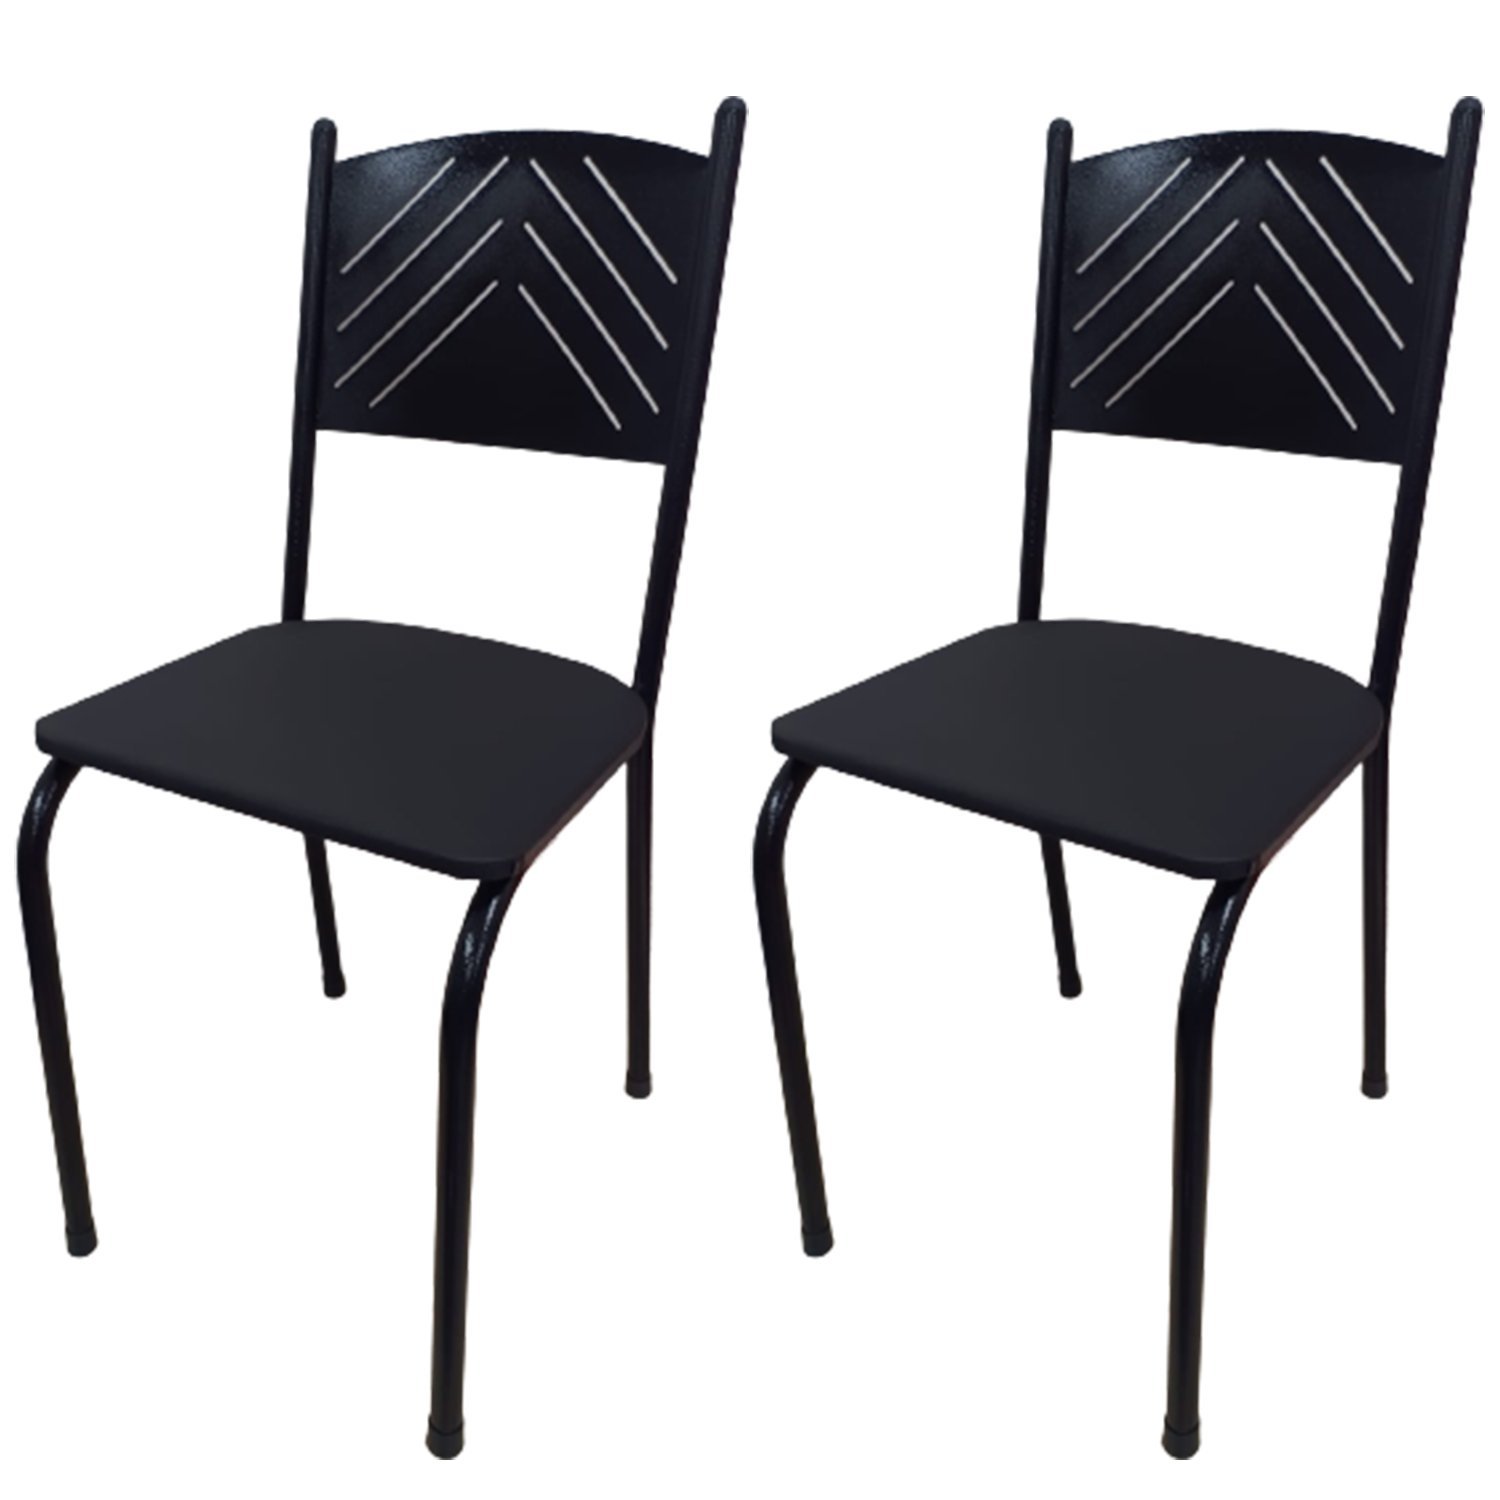 Kit 2 Cadeiras Preta para Cozinha Jantar Metal Tubular Almofadada Medcombo